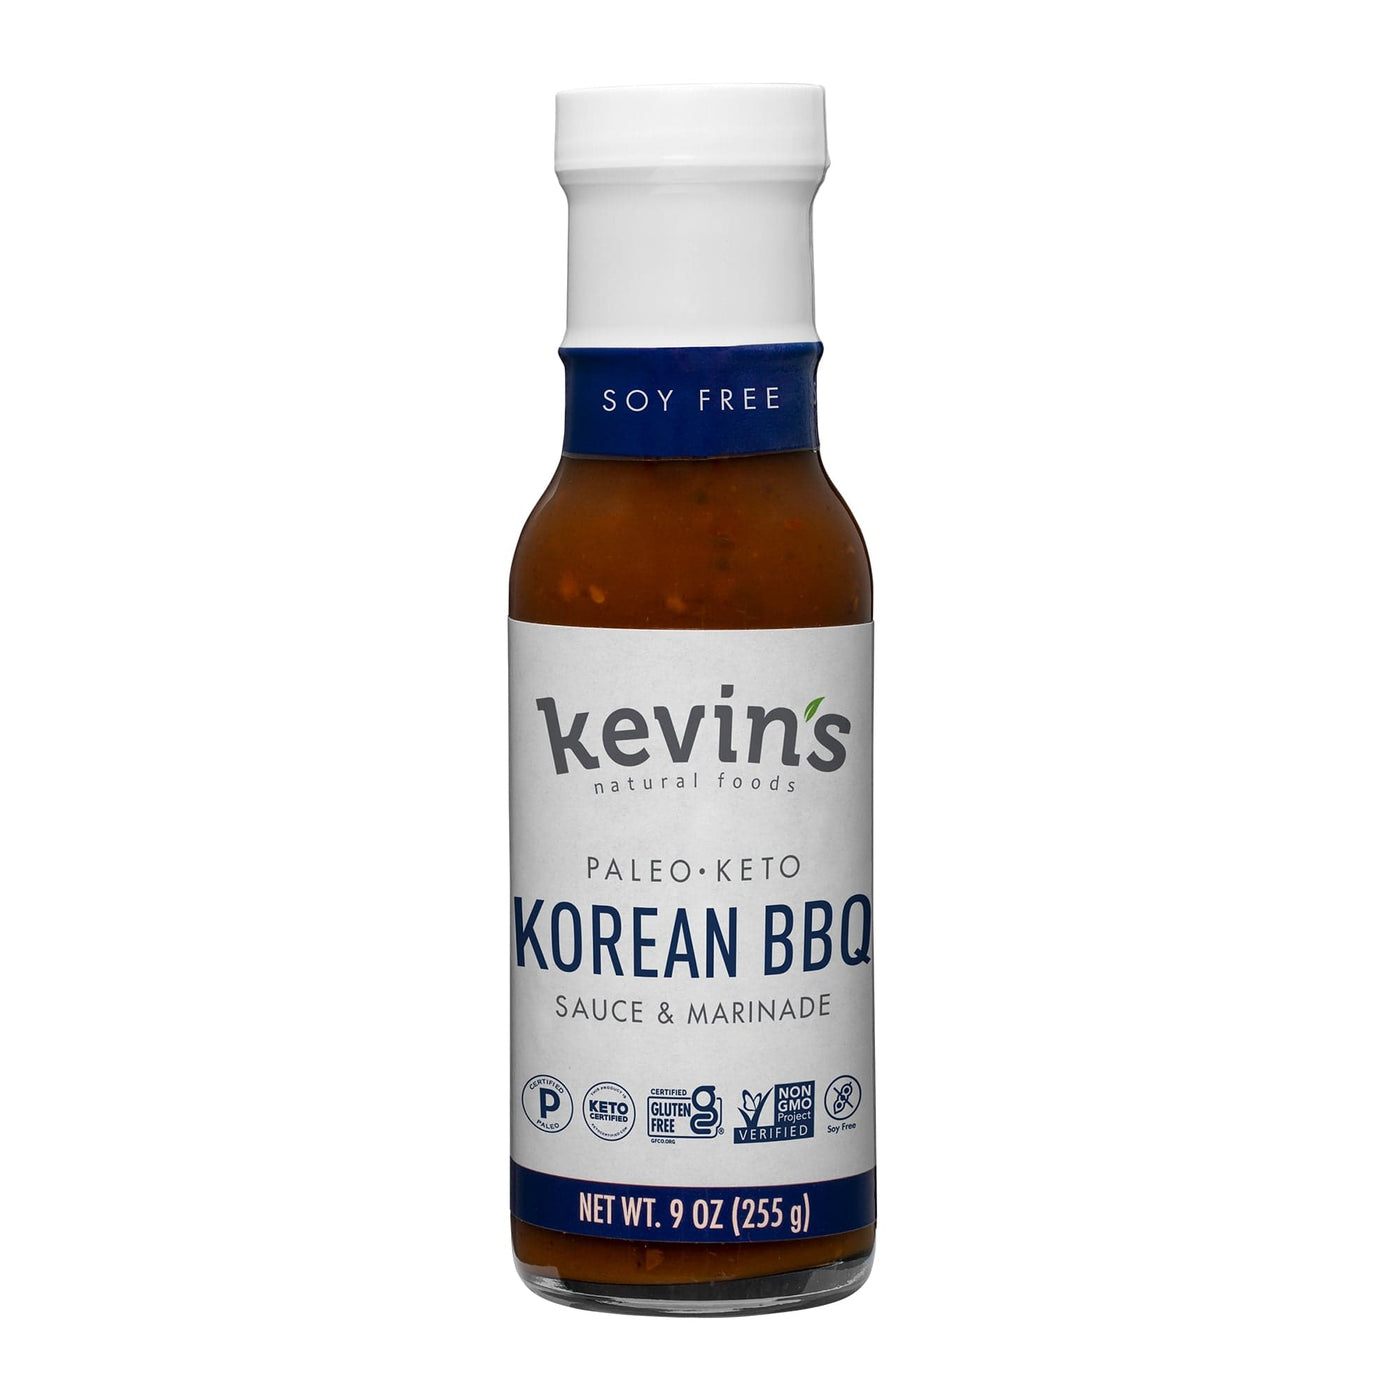 Korean BBQ Sauce & Marinade